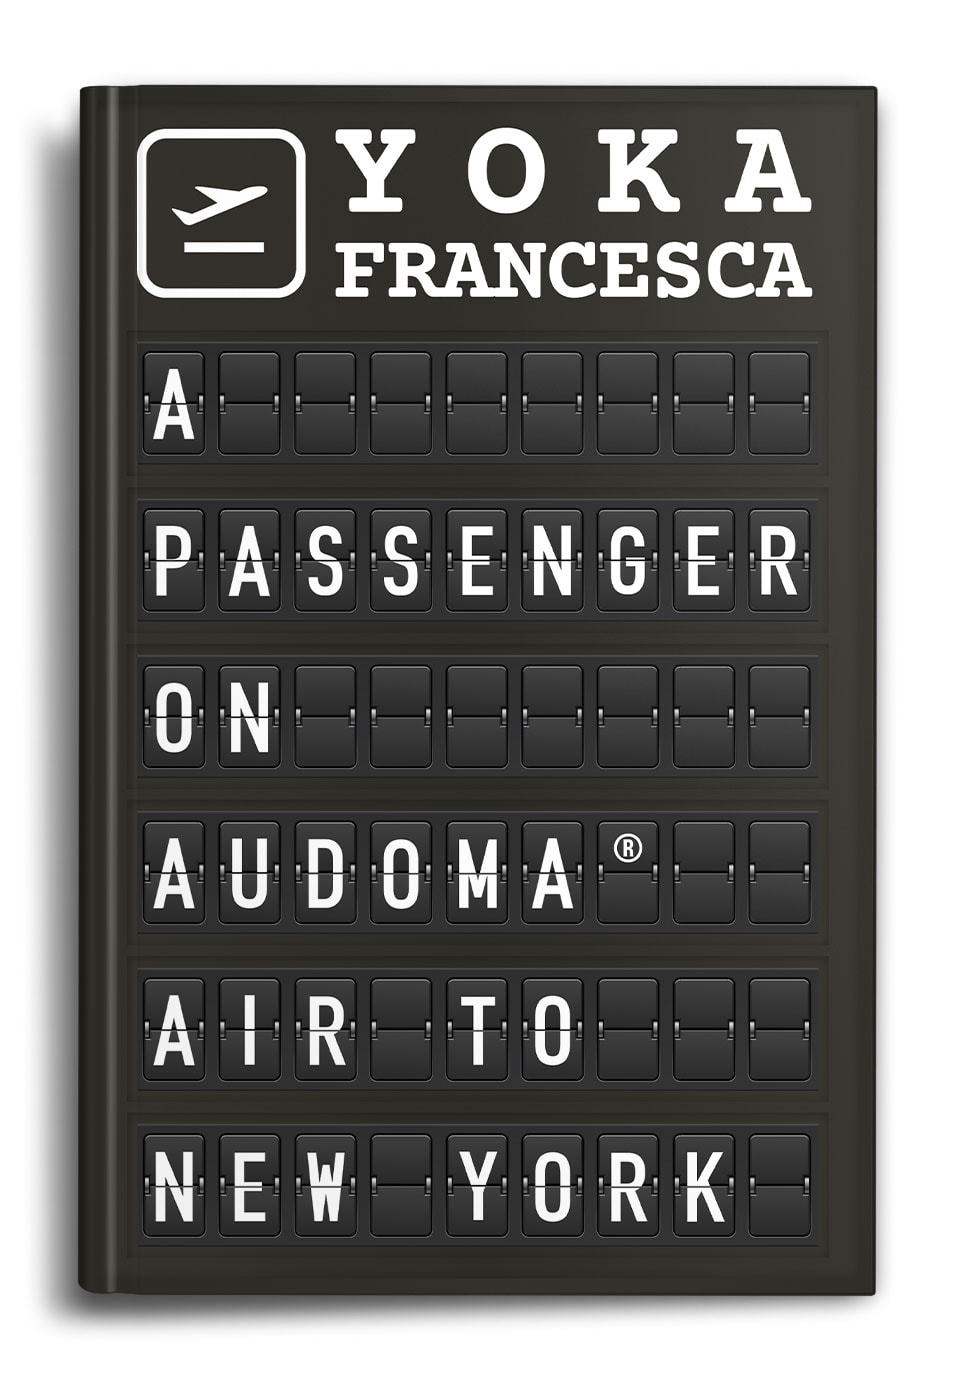 A-Passenger-On-Audoma-Air-by-Yoka-Francesca